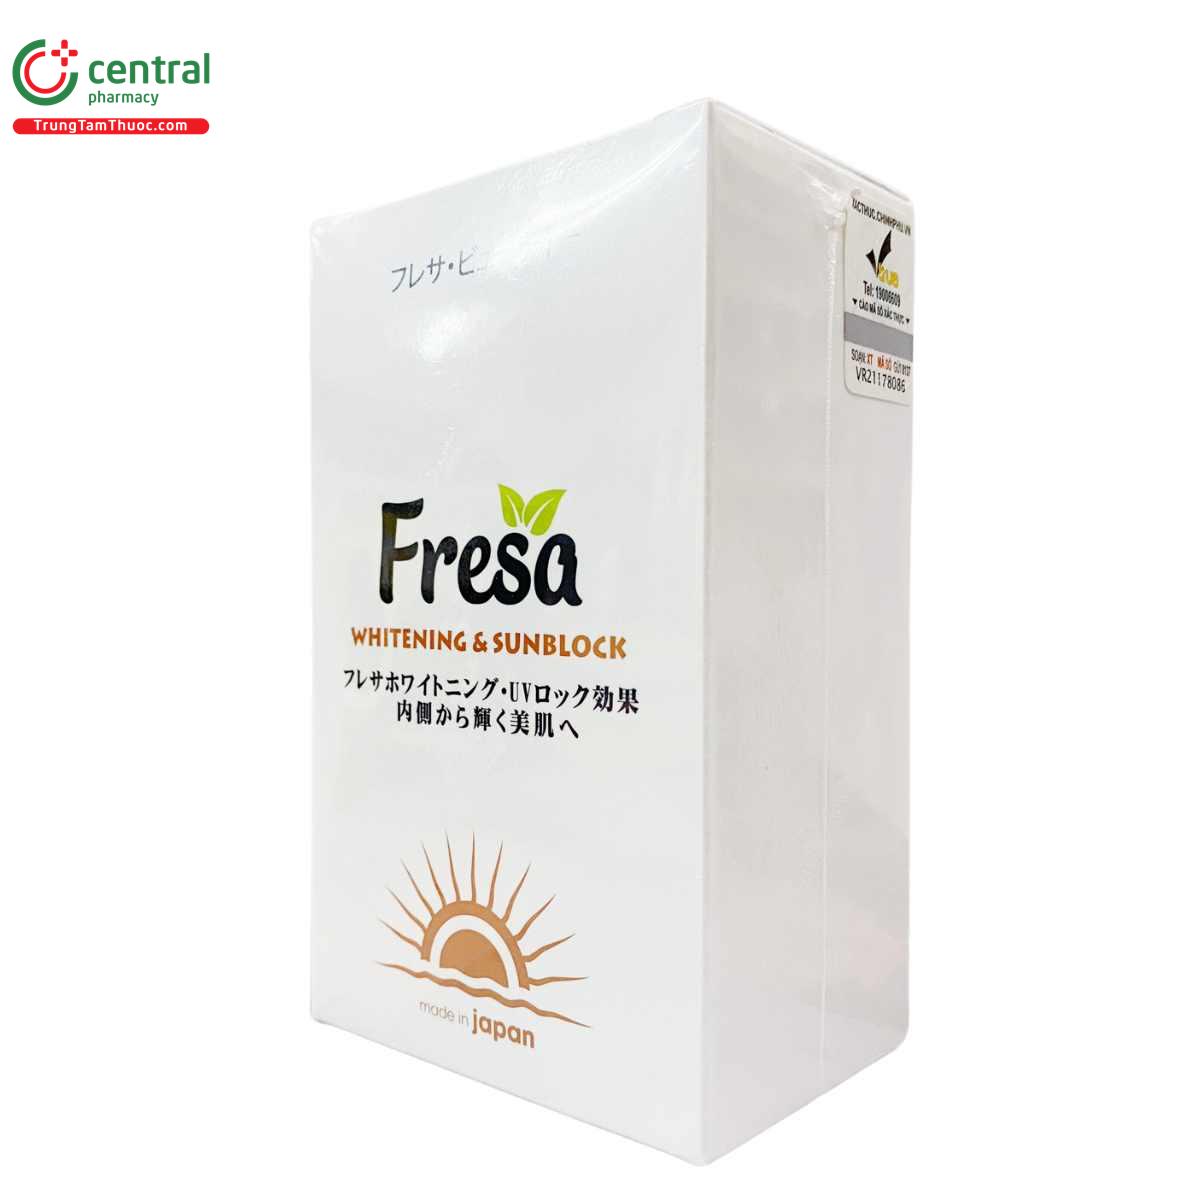 fresa whitening sunblock 4 J4700